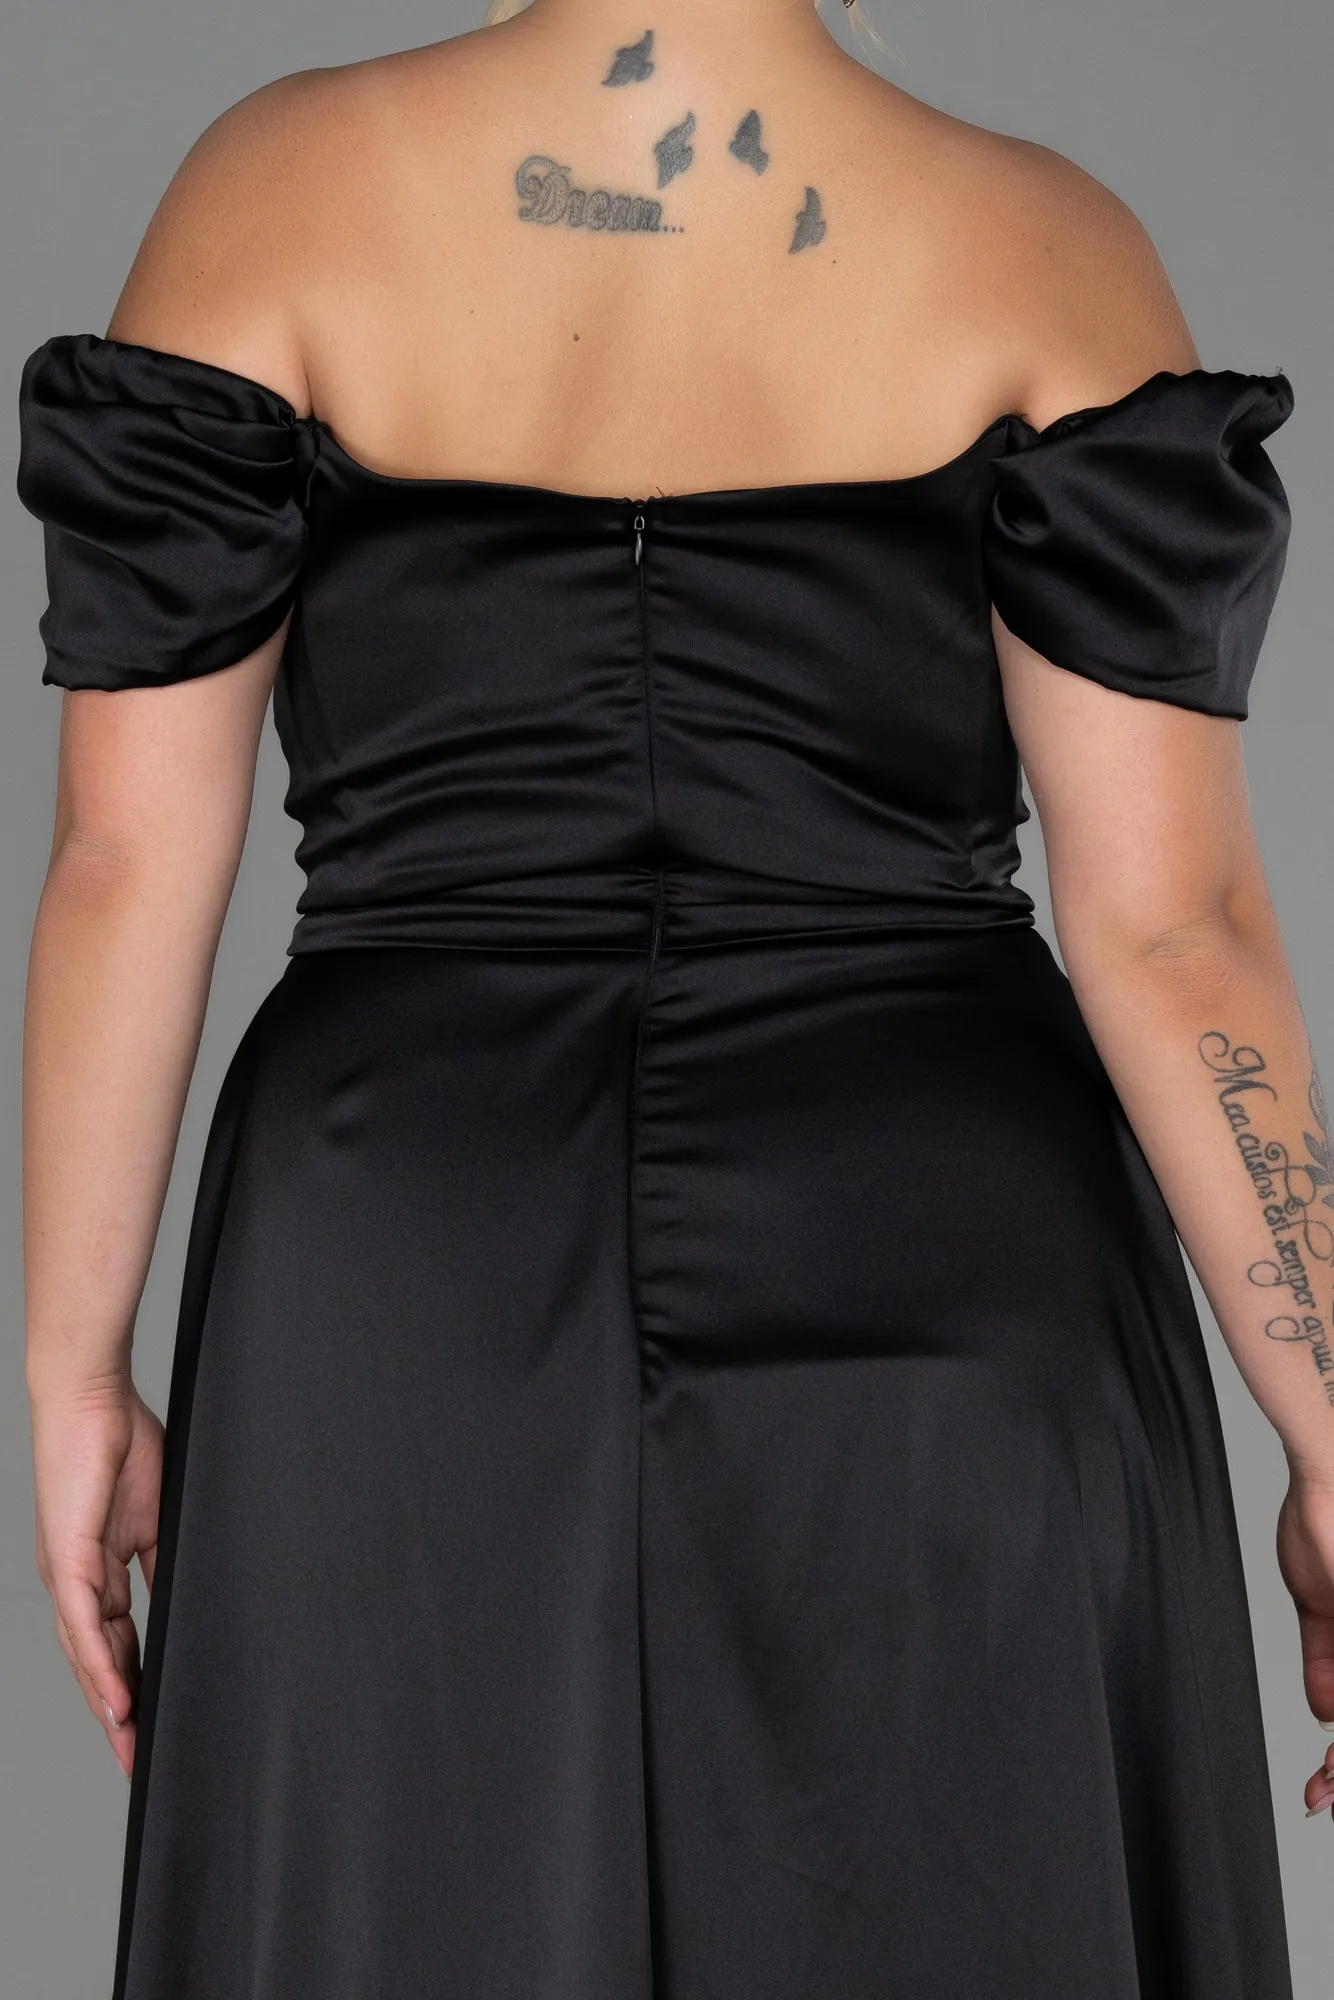 Black-Long Satin Plus Size Evening Dress ABU2923